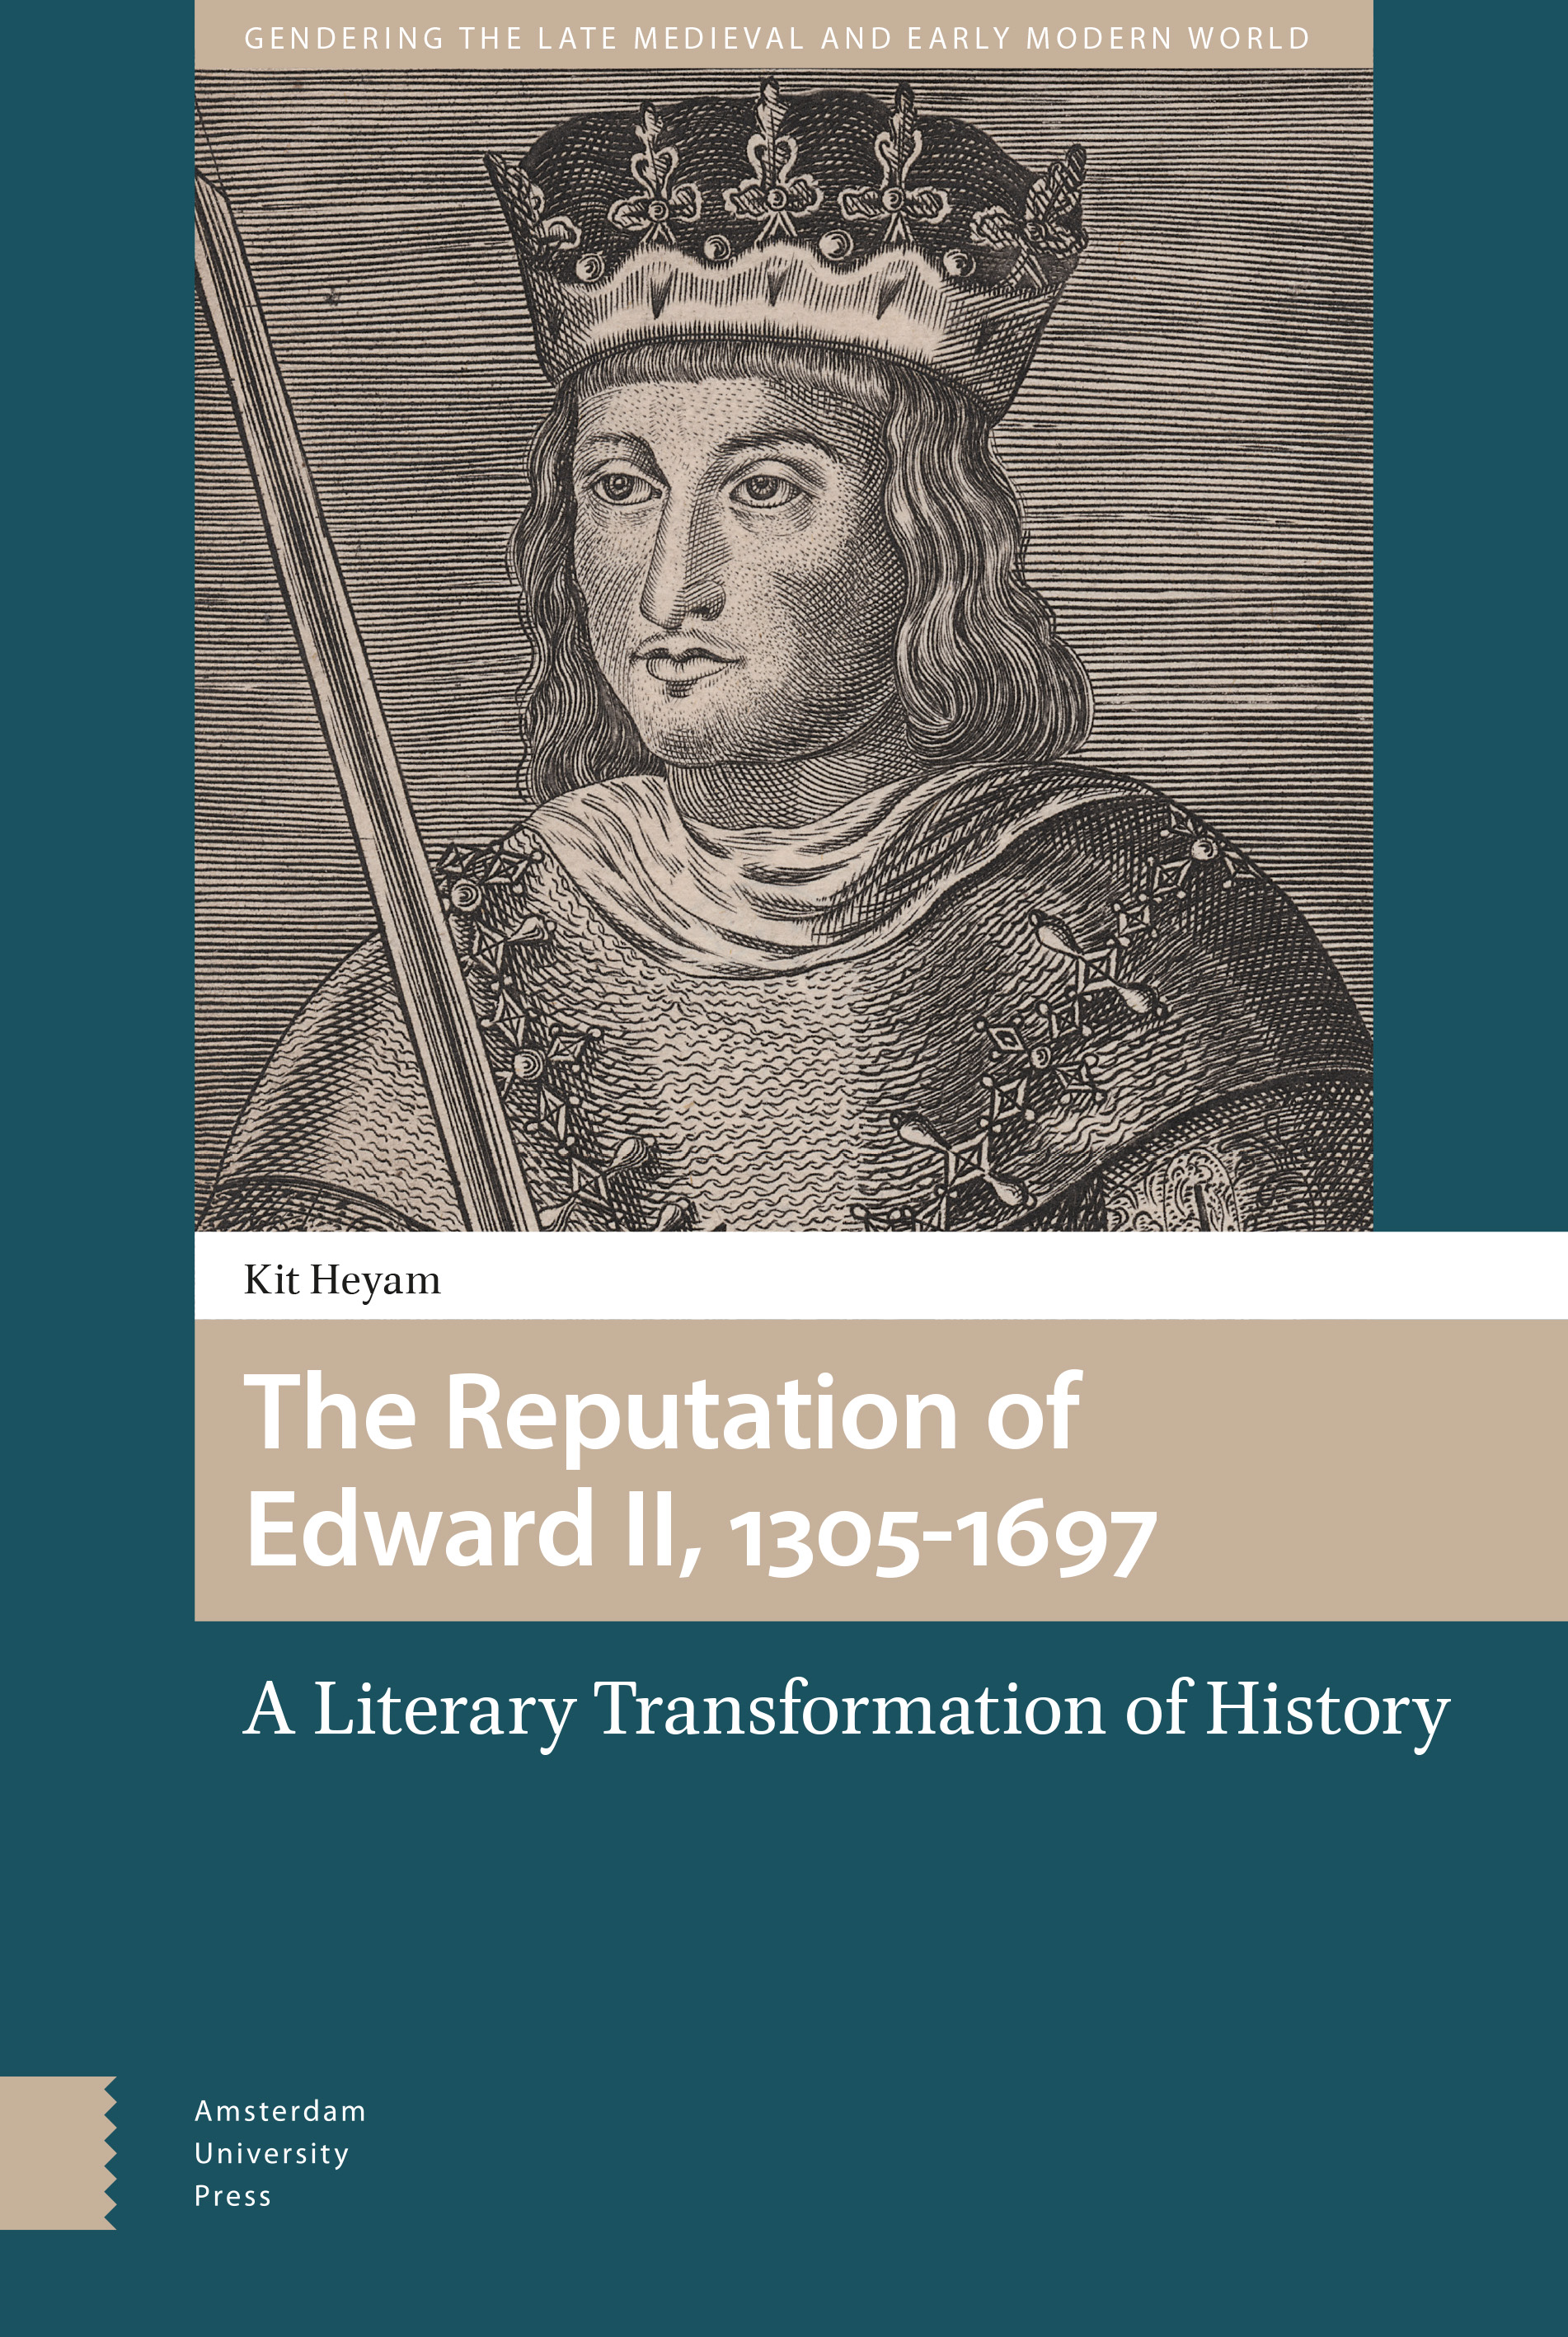 The Reputation of Edward II